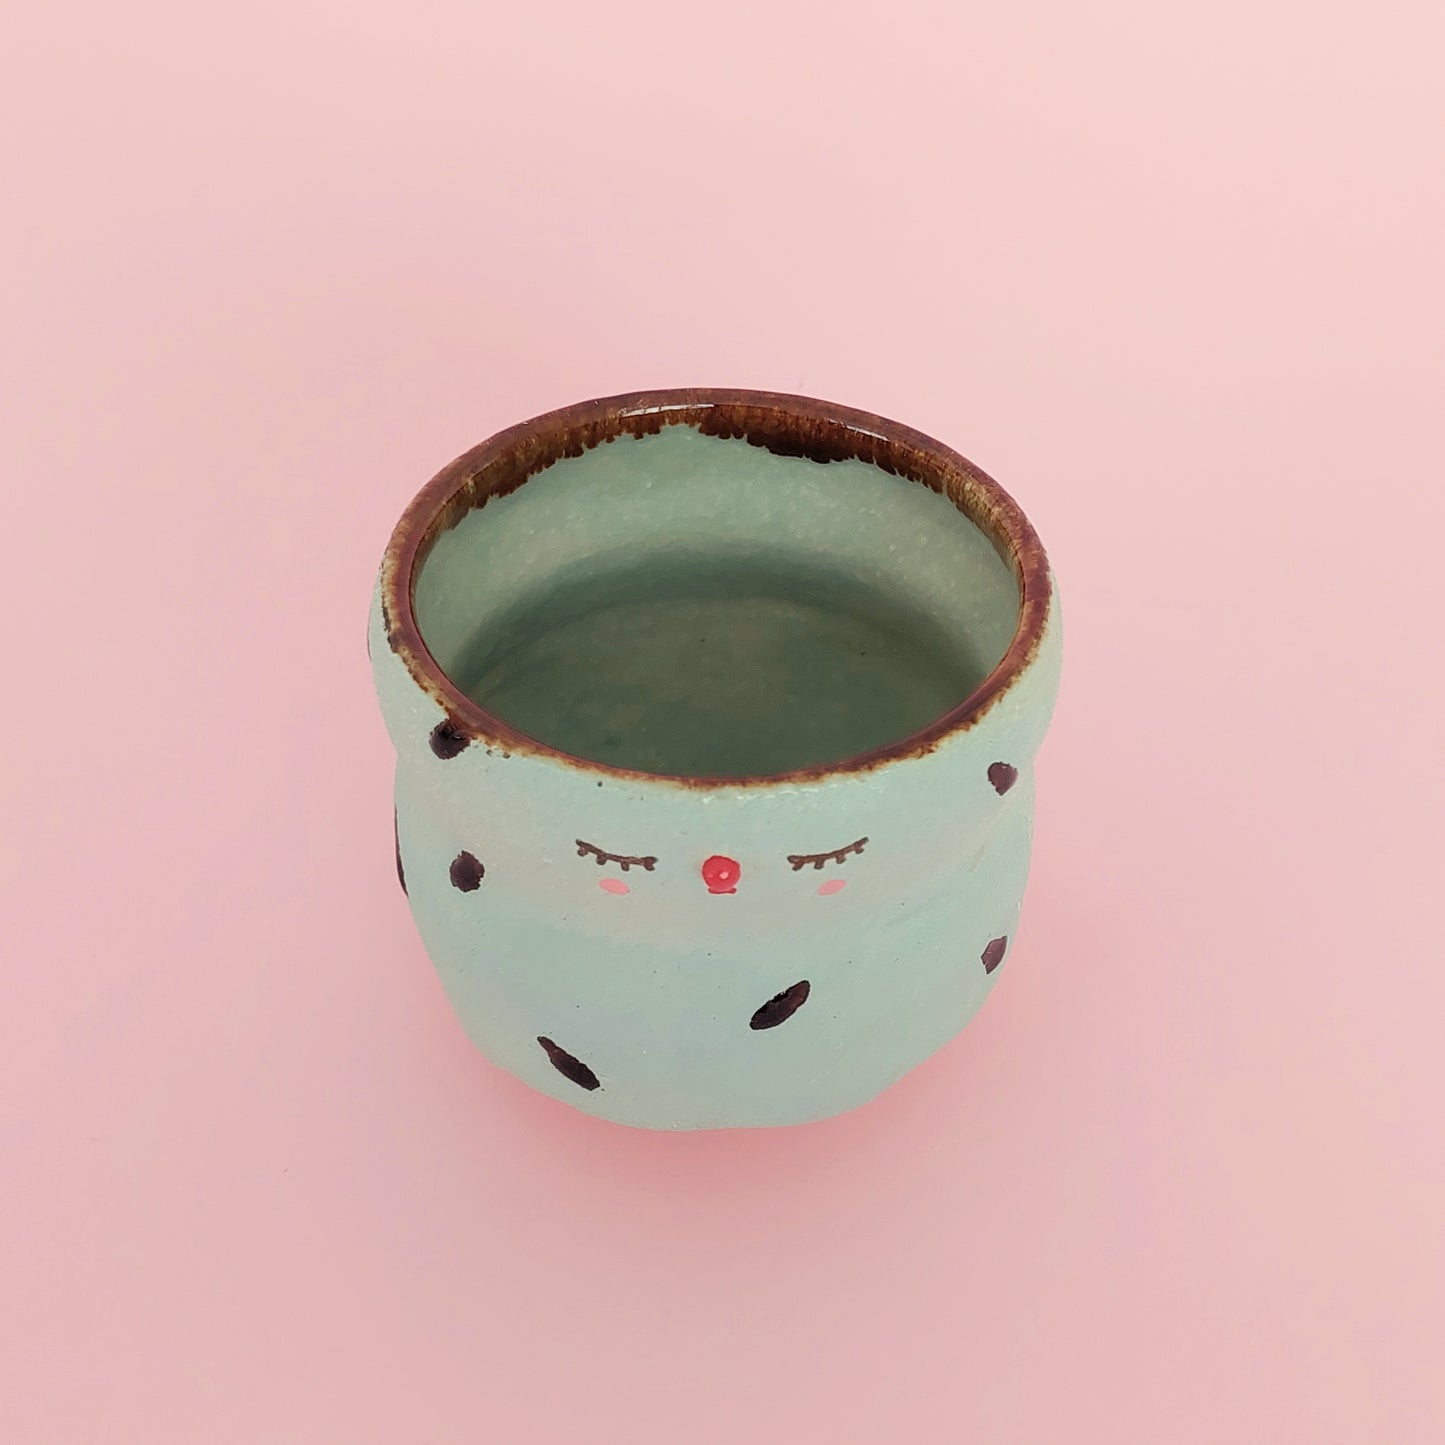 Melty pierrot tea cup - choco mint